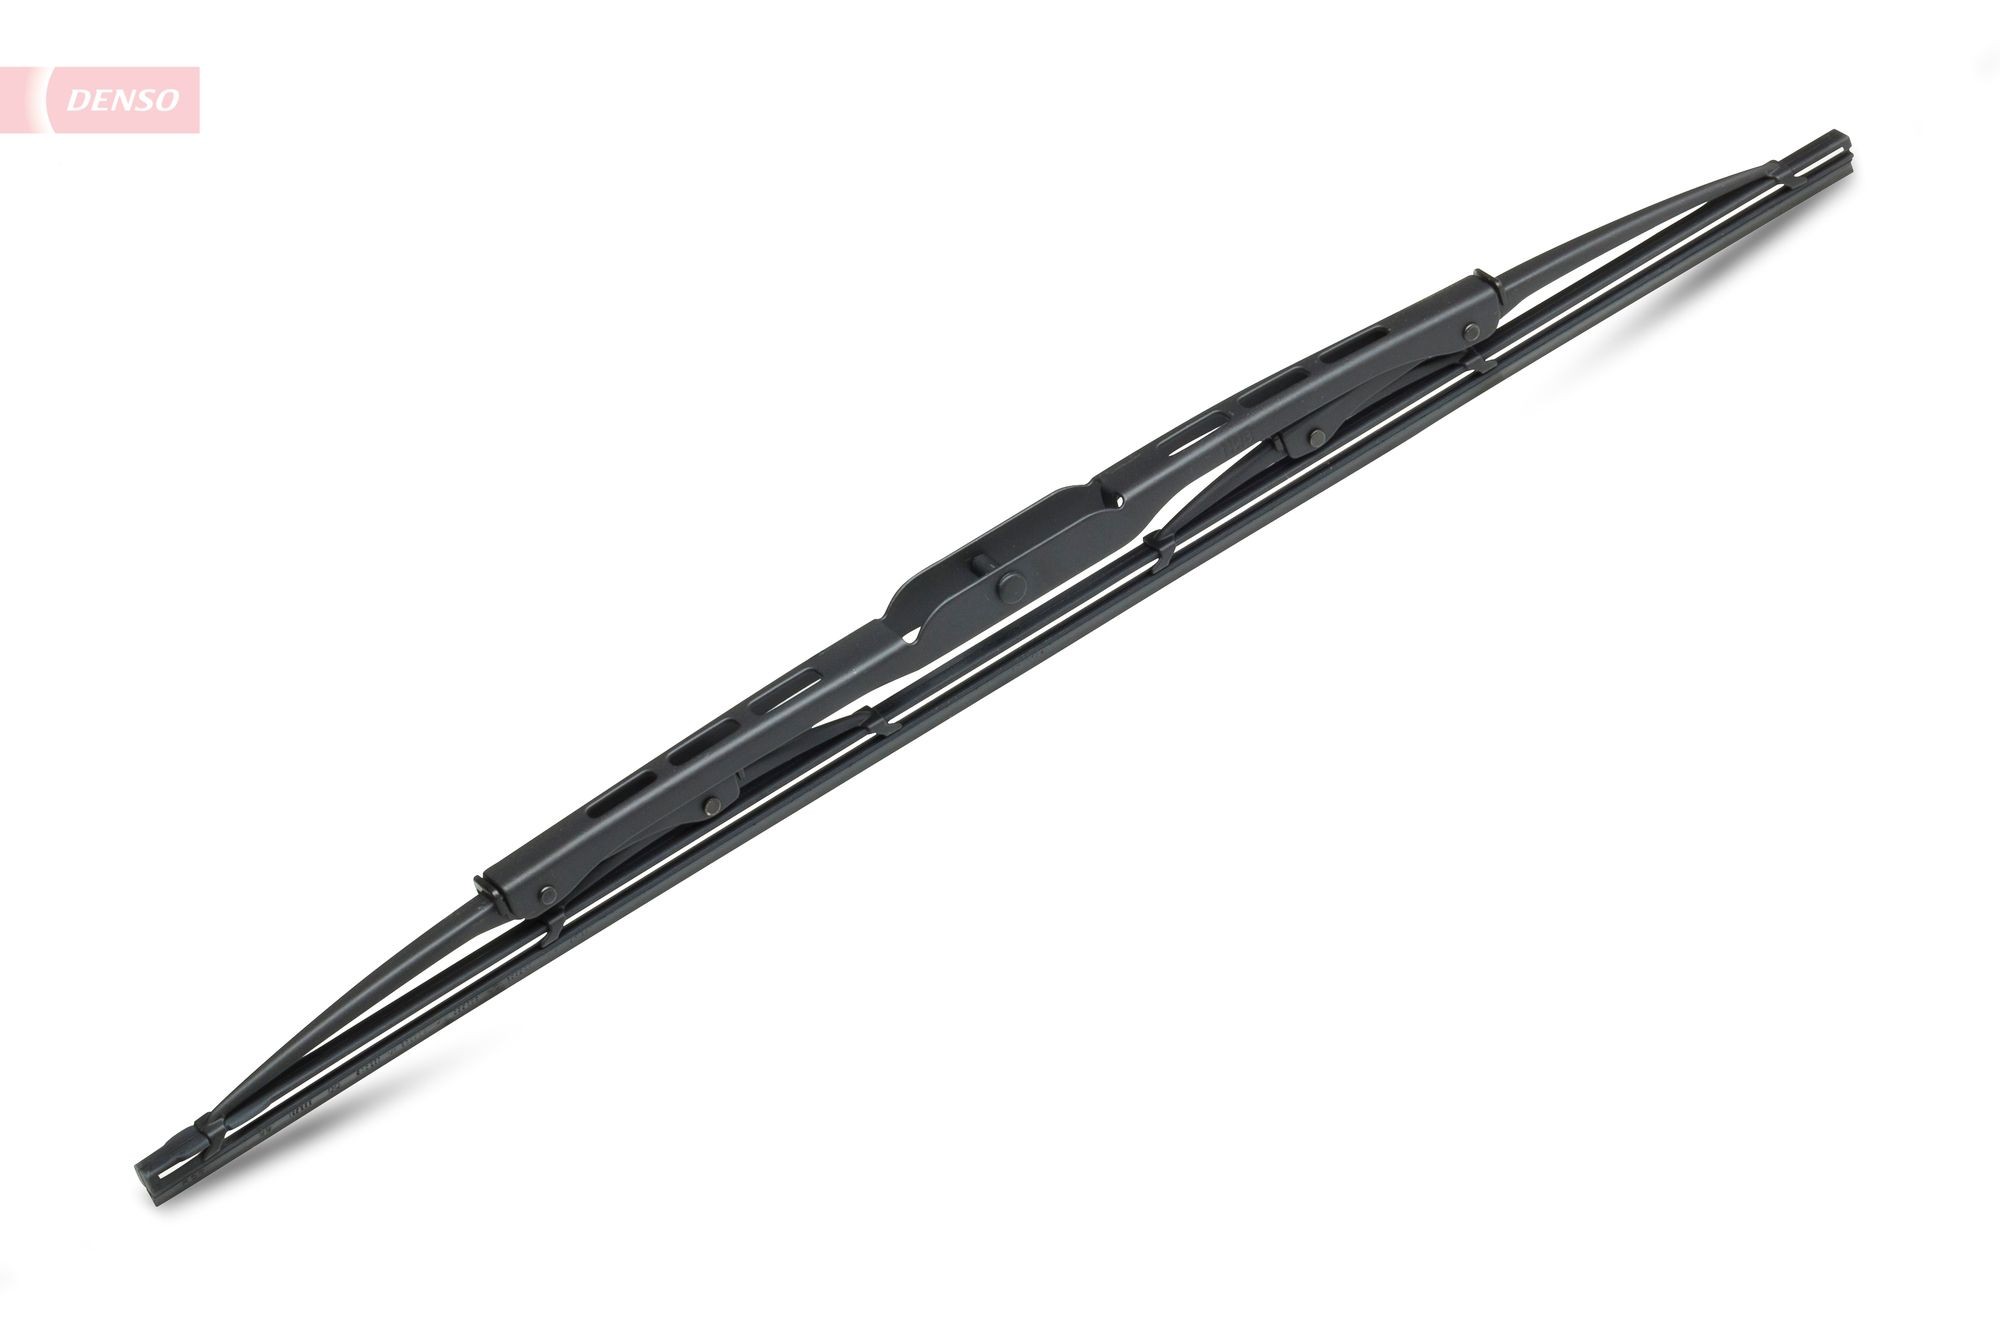 DENSO Standard DM-043 Wiper blade 425 mm, Standard, 17 Inch